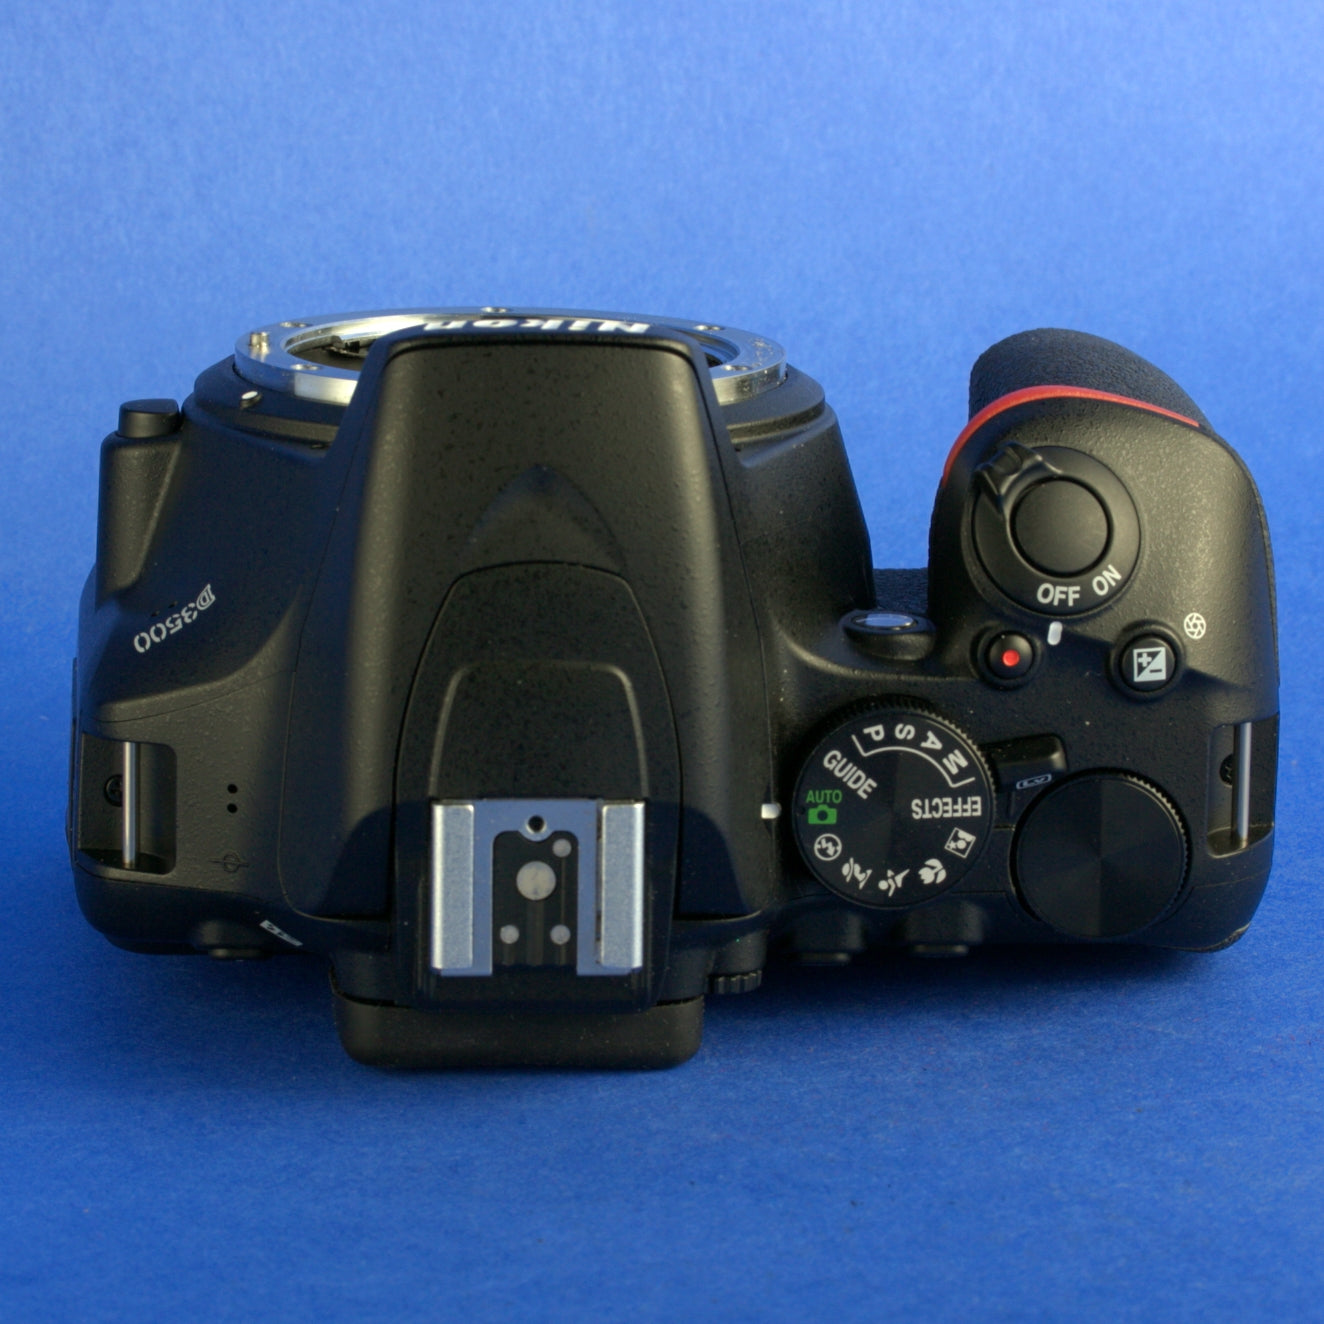 Nikon D3500 Digital Camera Body US Model 3800 Actuations Near Mint Condition